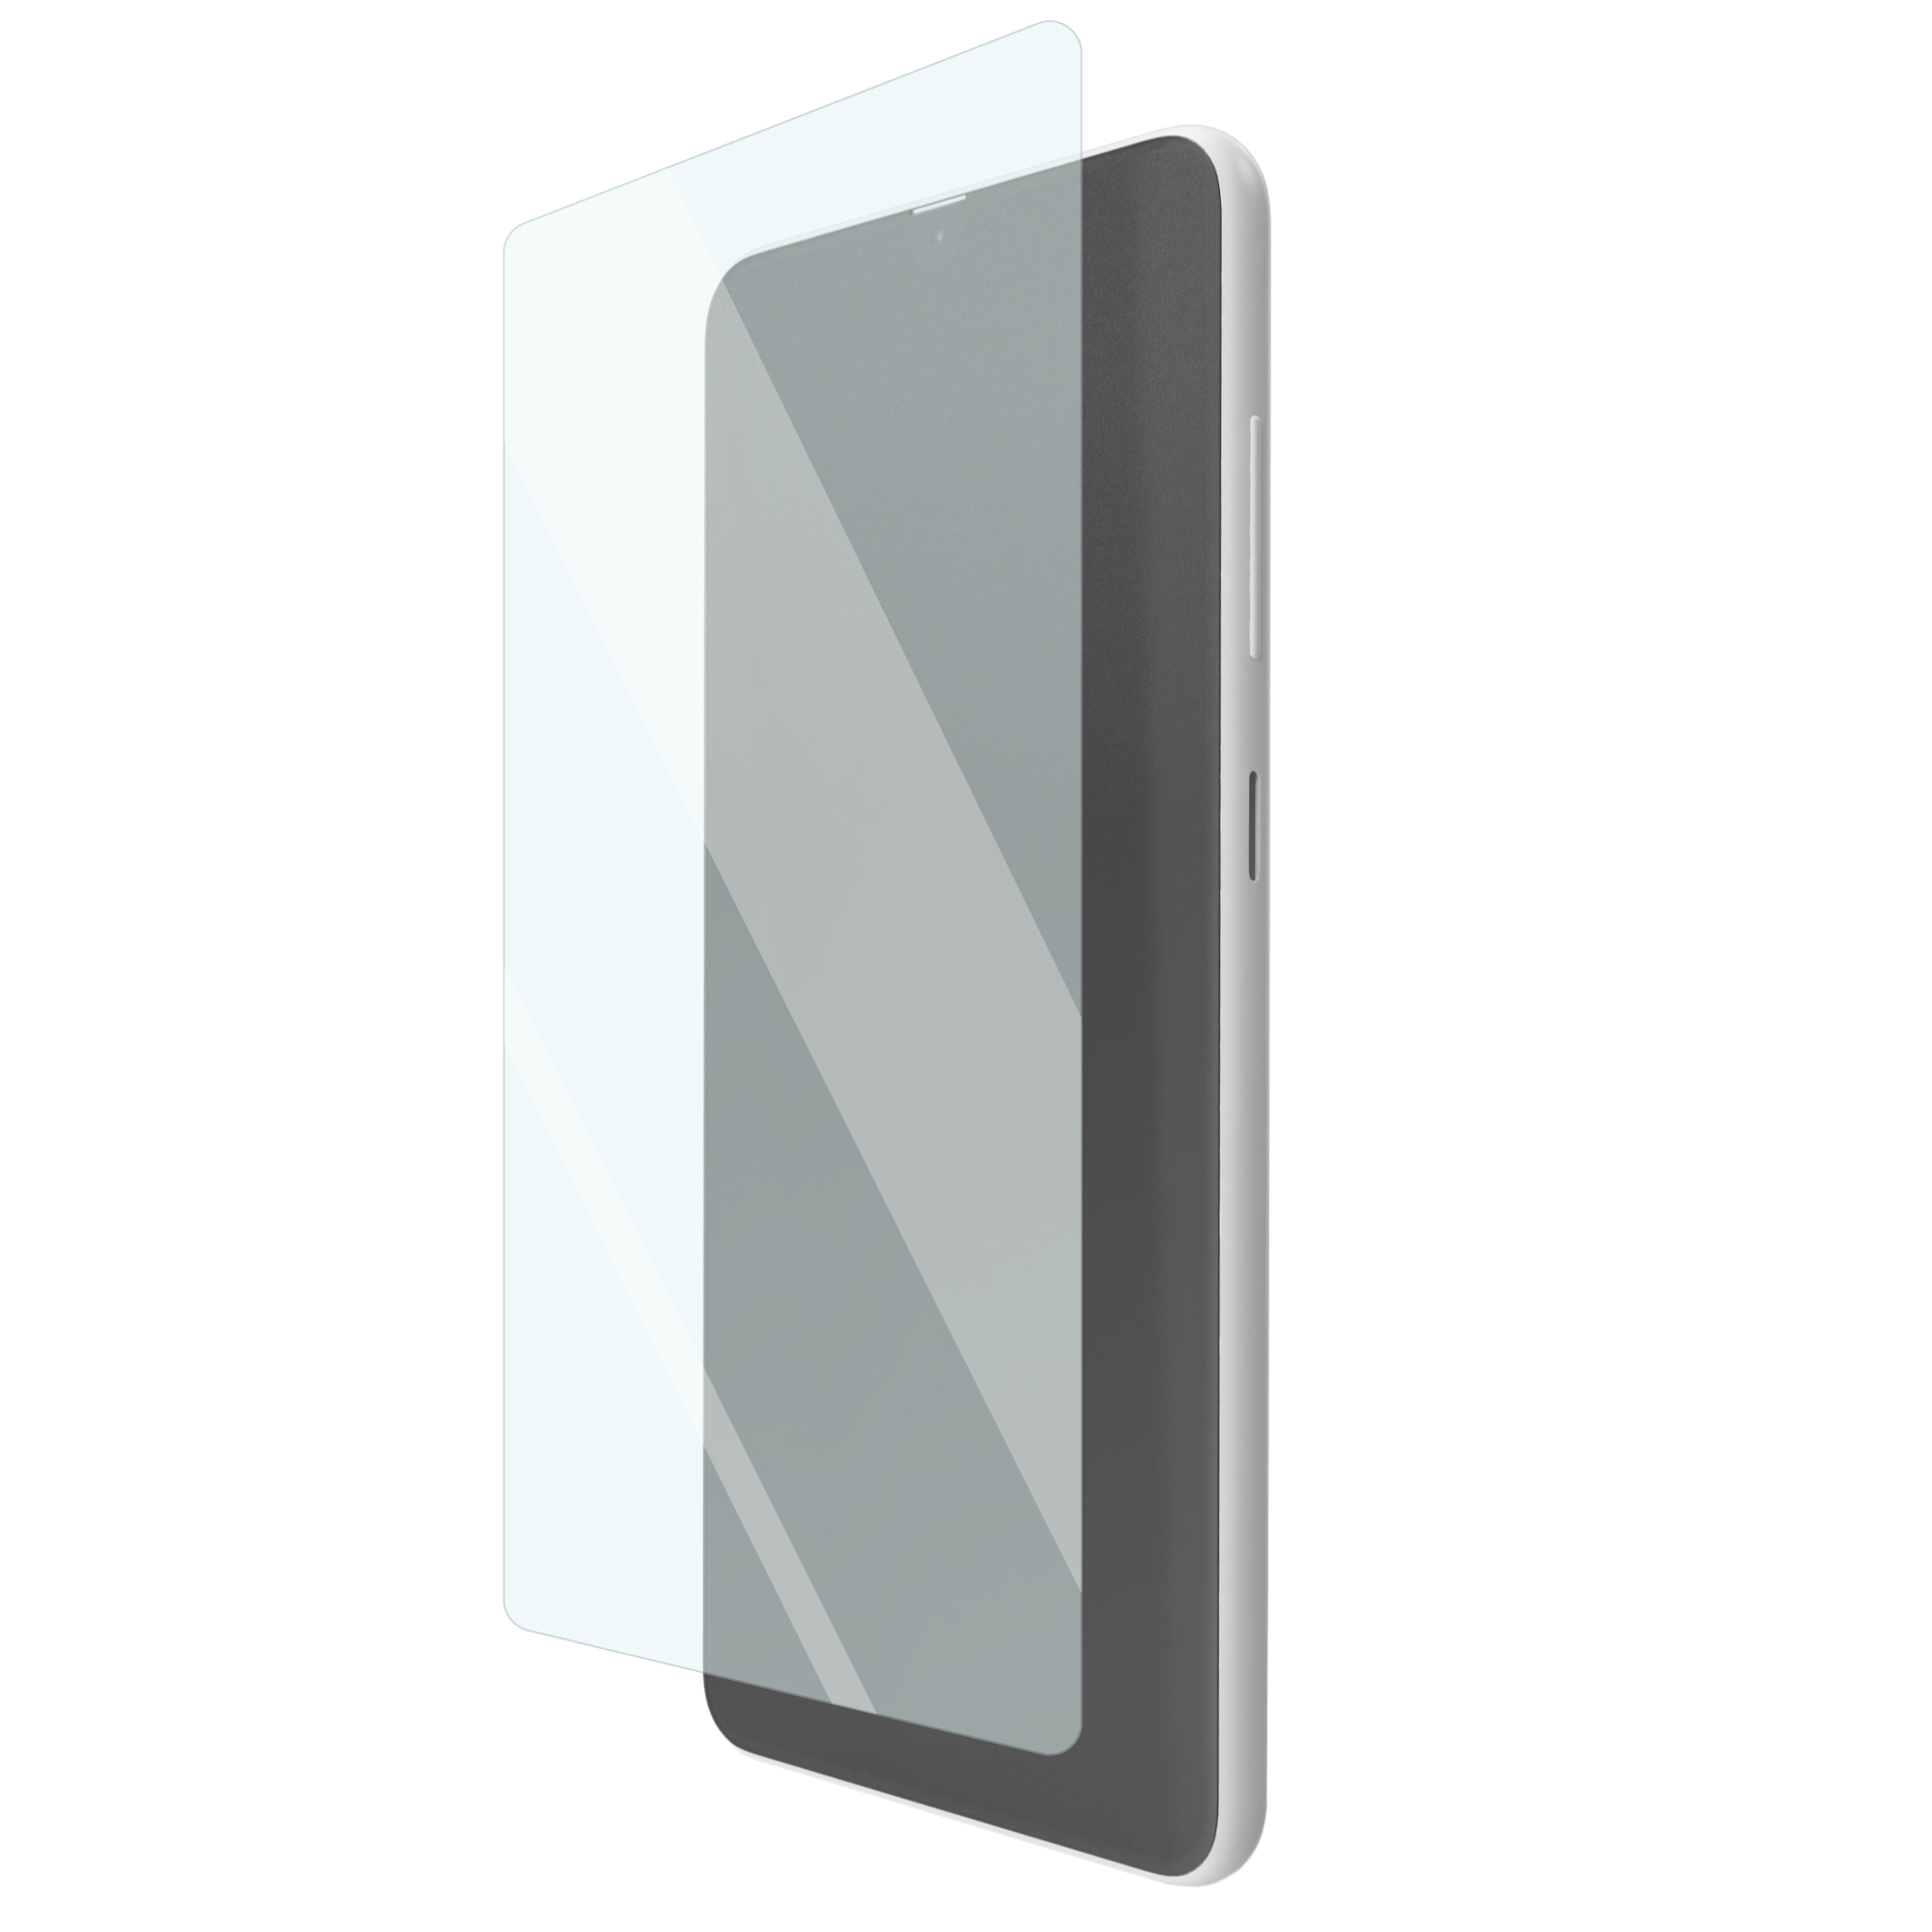 Folie de protectie silicon ShieldUP HiTech Regenerable pentru OnePlus 7T Pro thumb